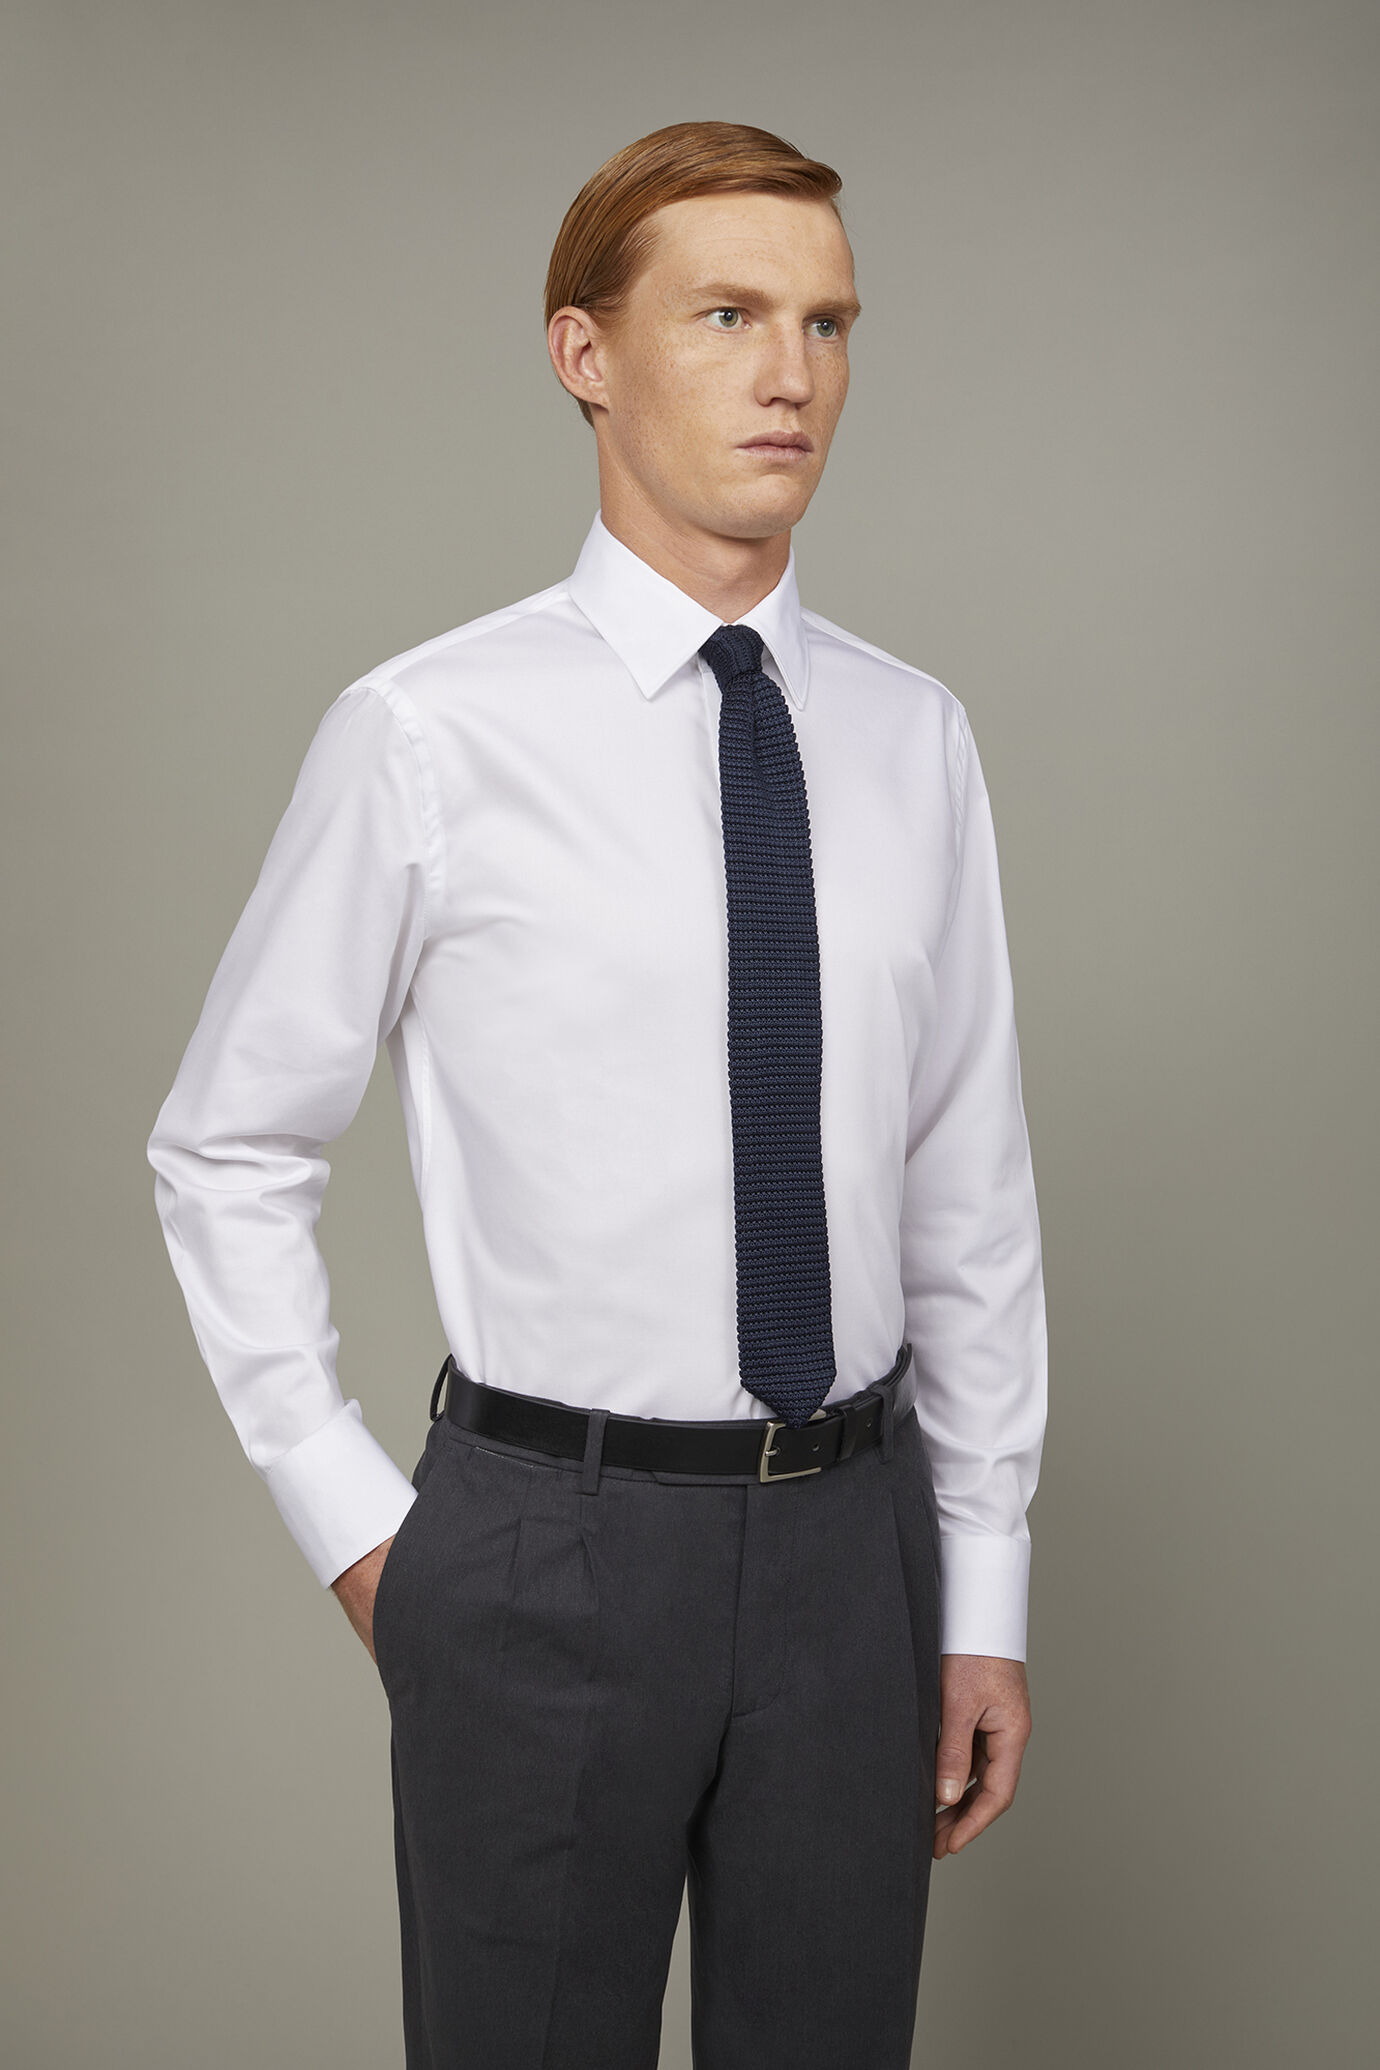 Men's shirt classic collar 100% cotton twill fabric solid regular fit